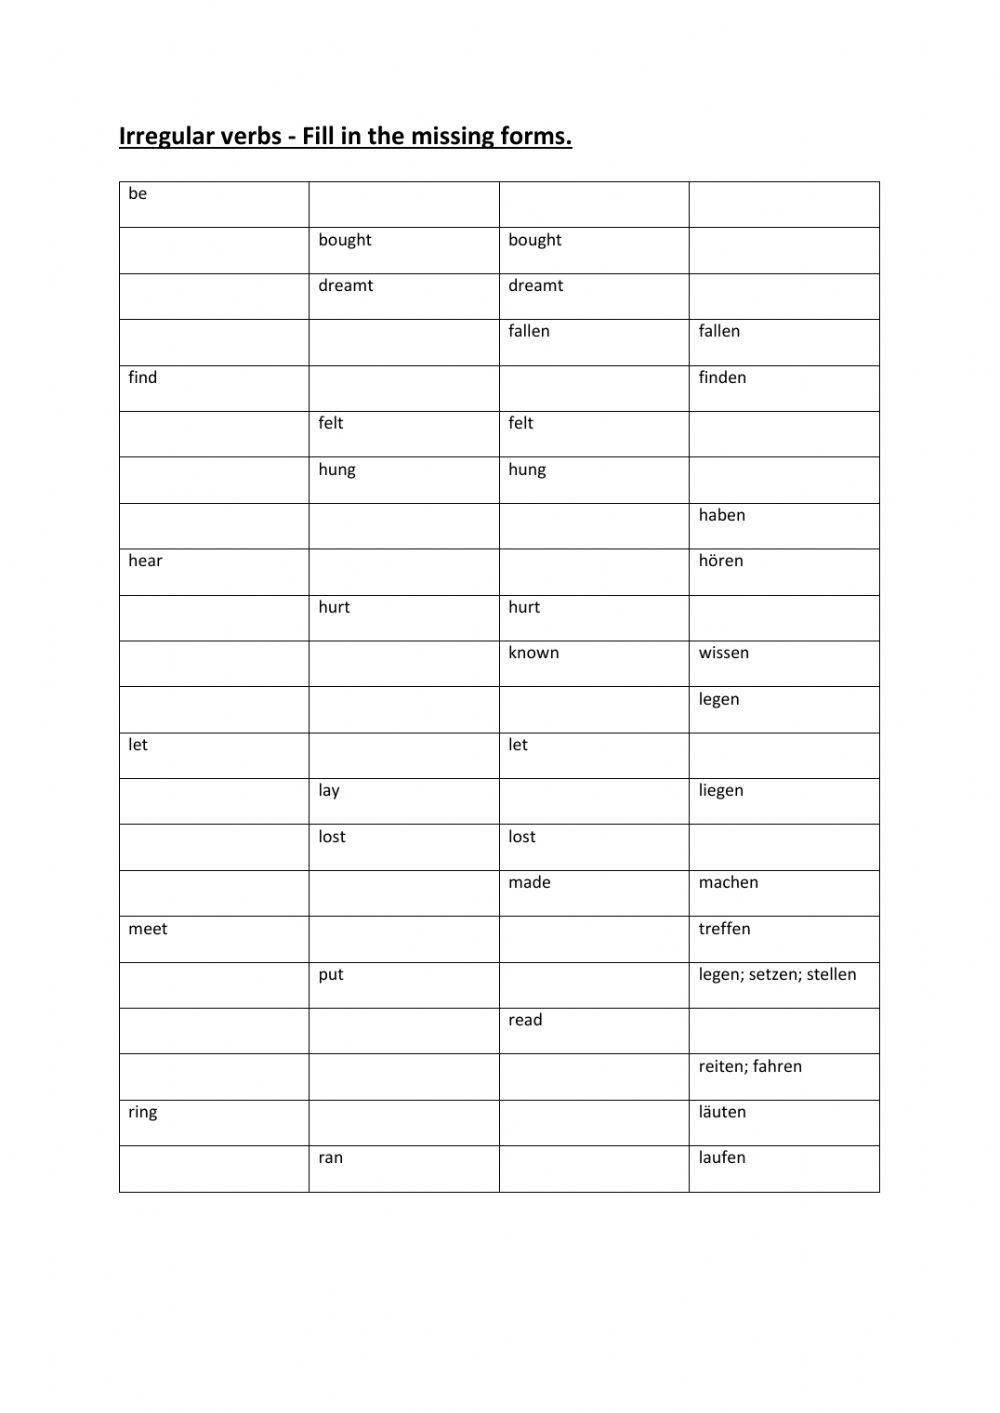 Irregular verbs 1-50 (be-run)